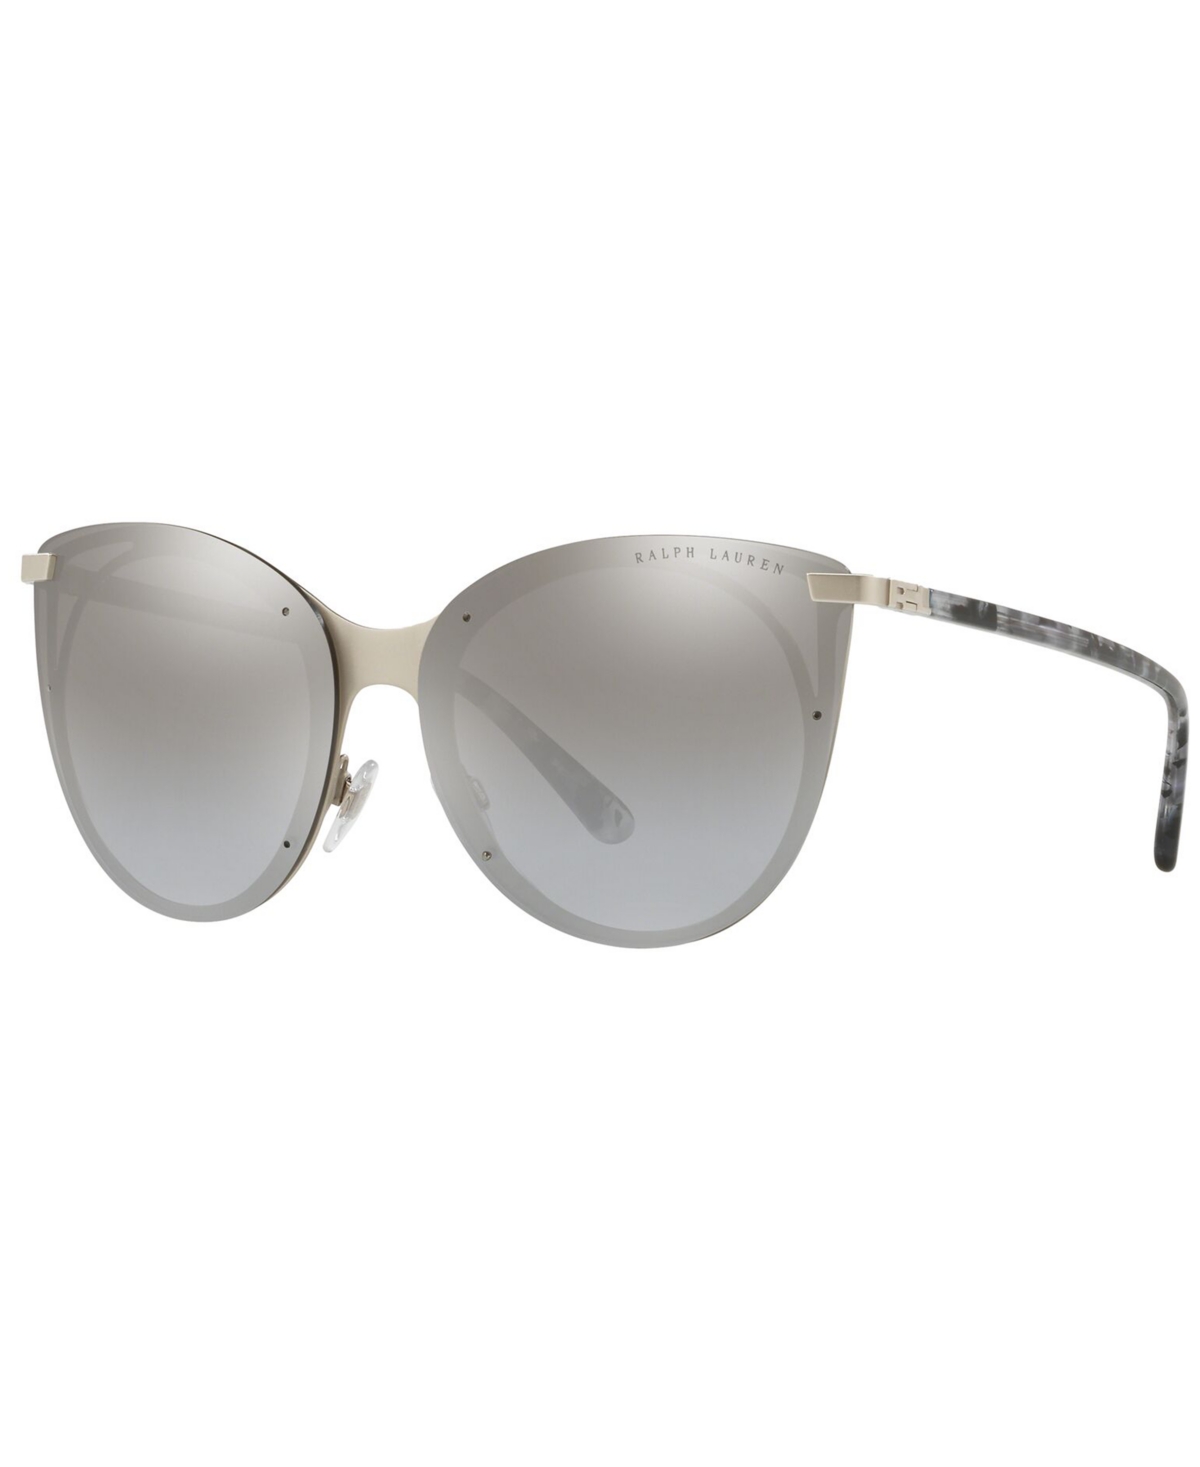 Ralph Lauren Women's Sunglasses, Rl7059 In Silver,silver